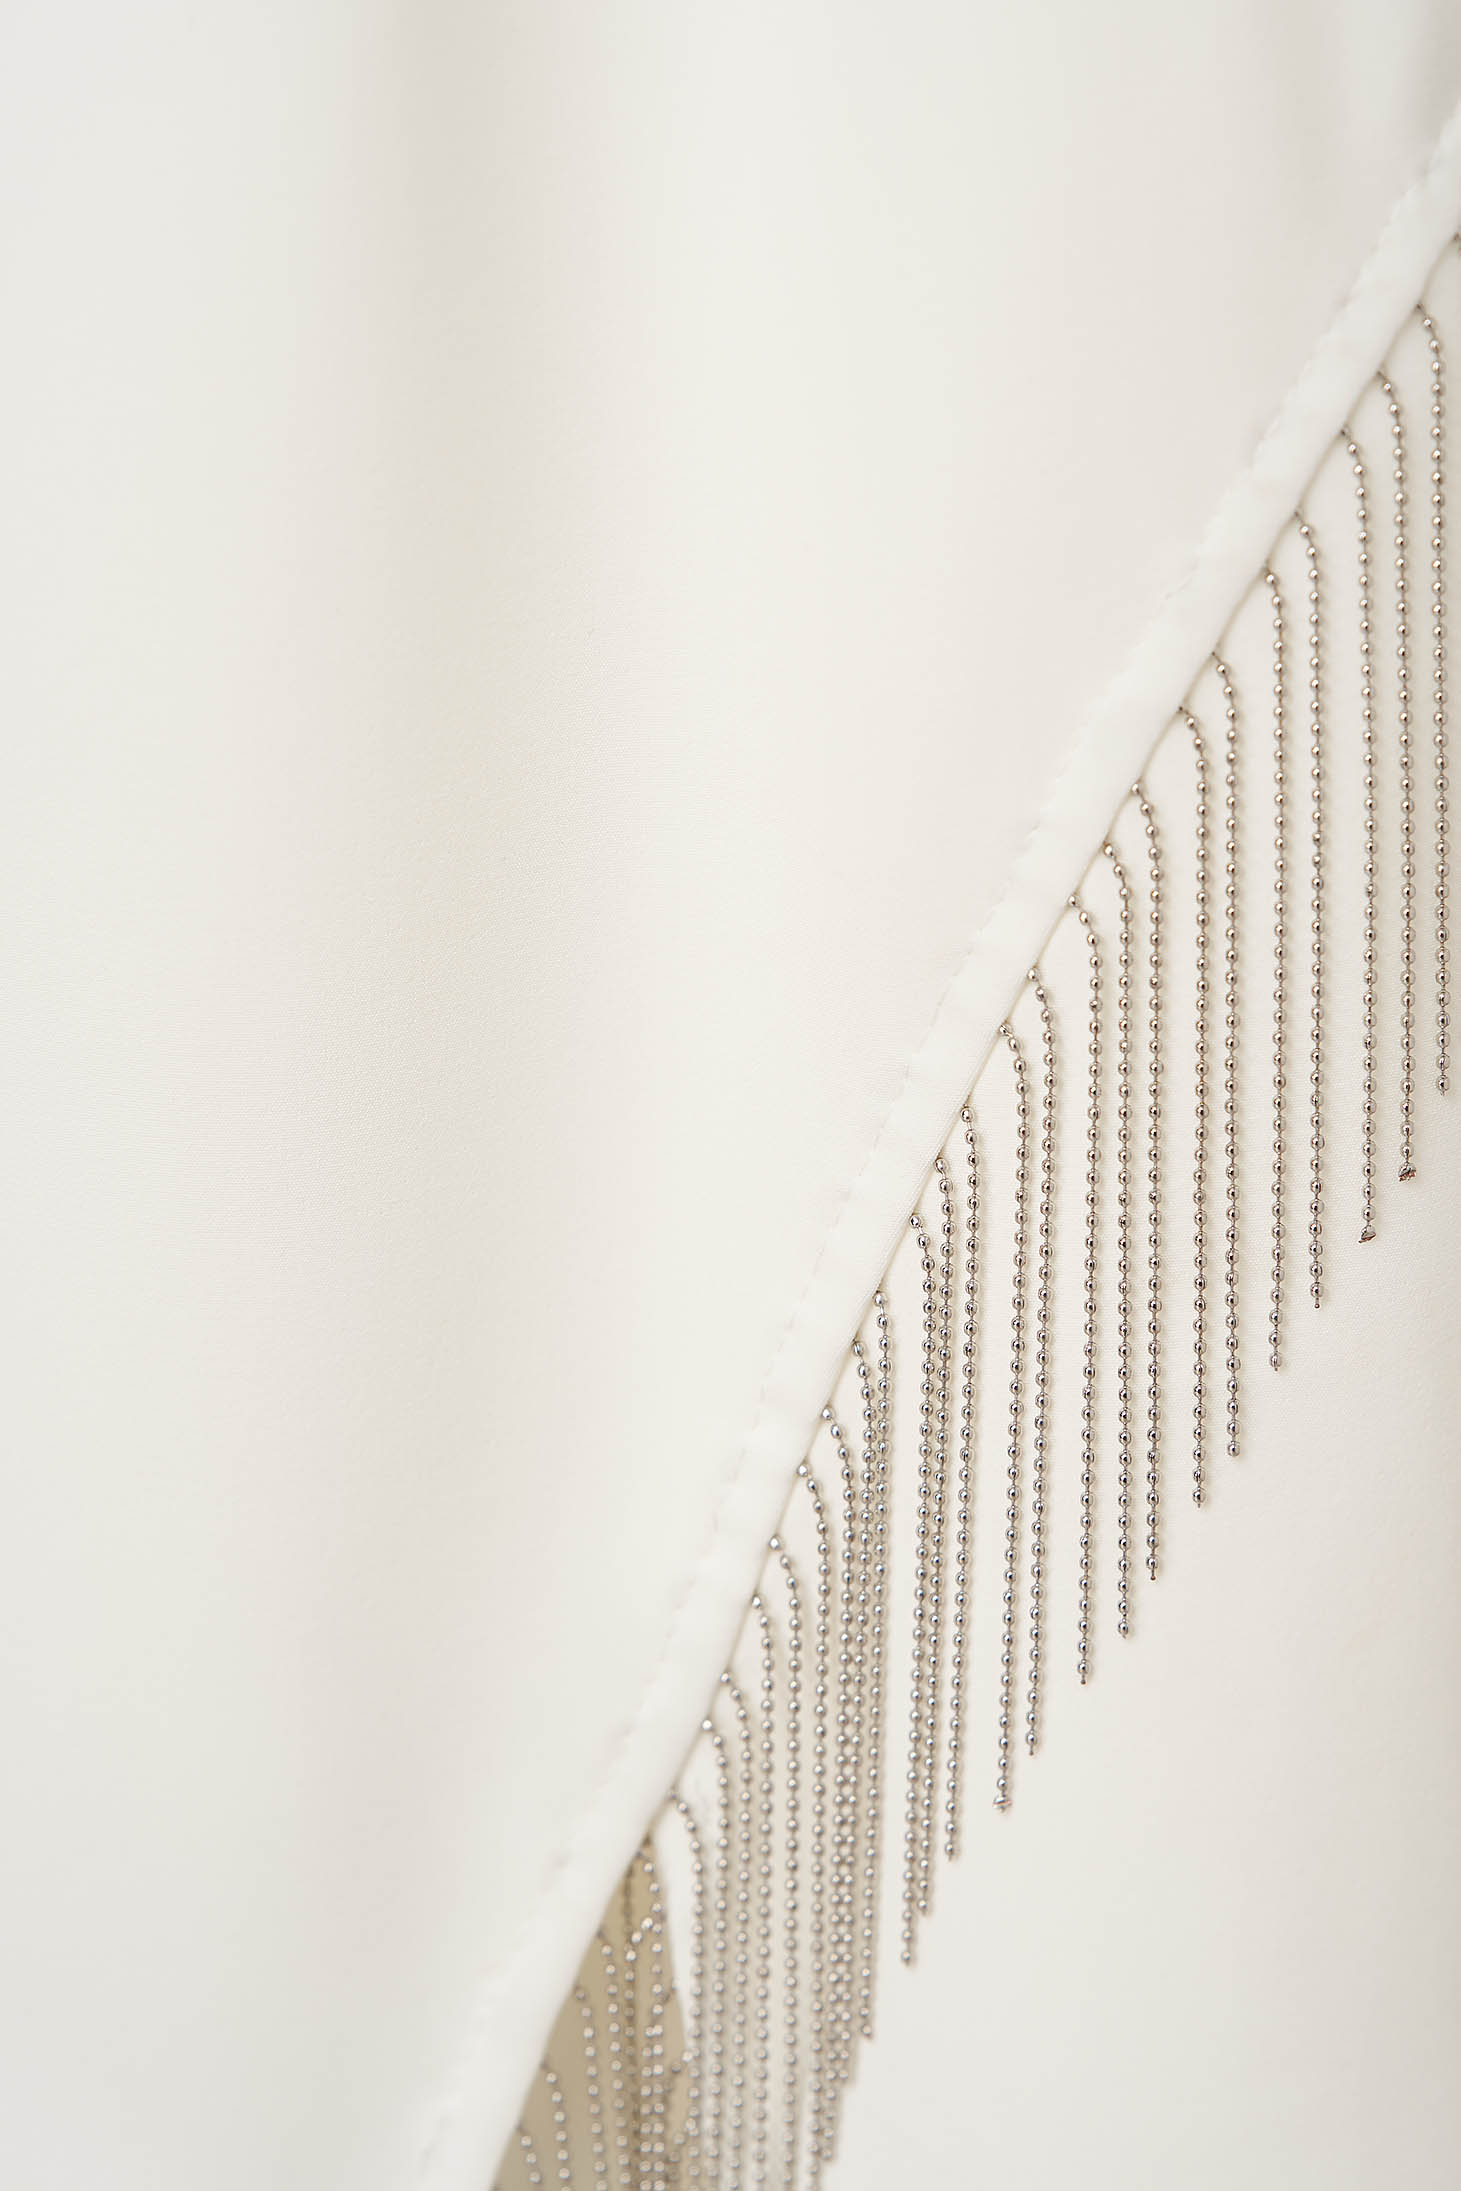 Rochie din stofa elastica ivoire scurta tip creion cu franjuri metalici - StarShinerS 5 - StarShinerS.ro